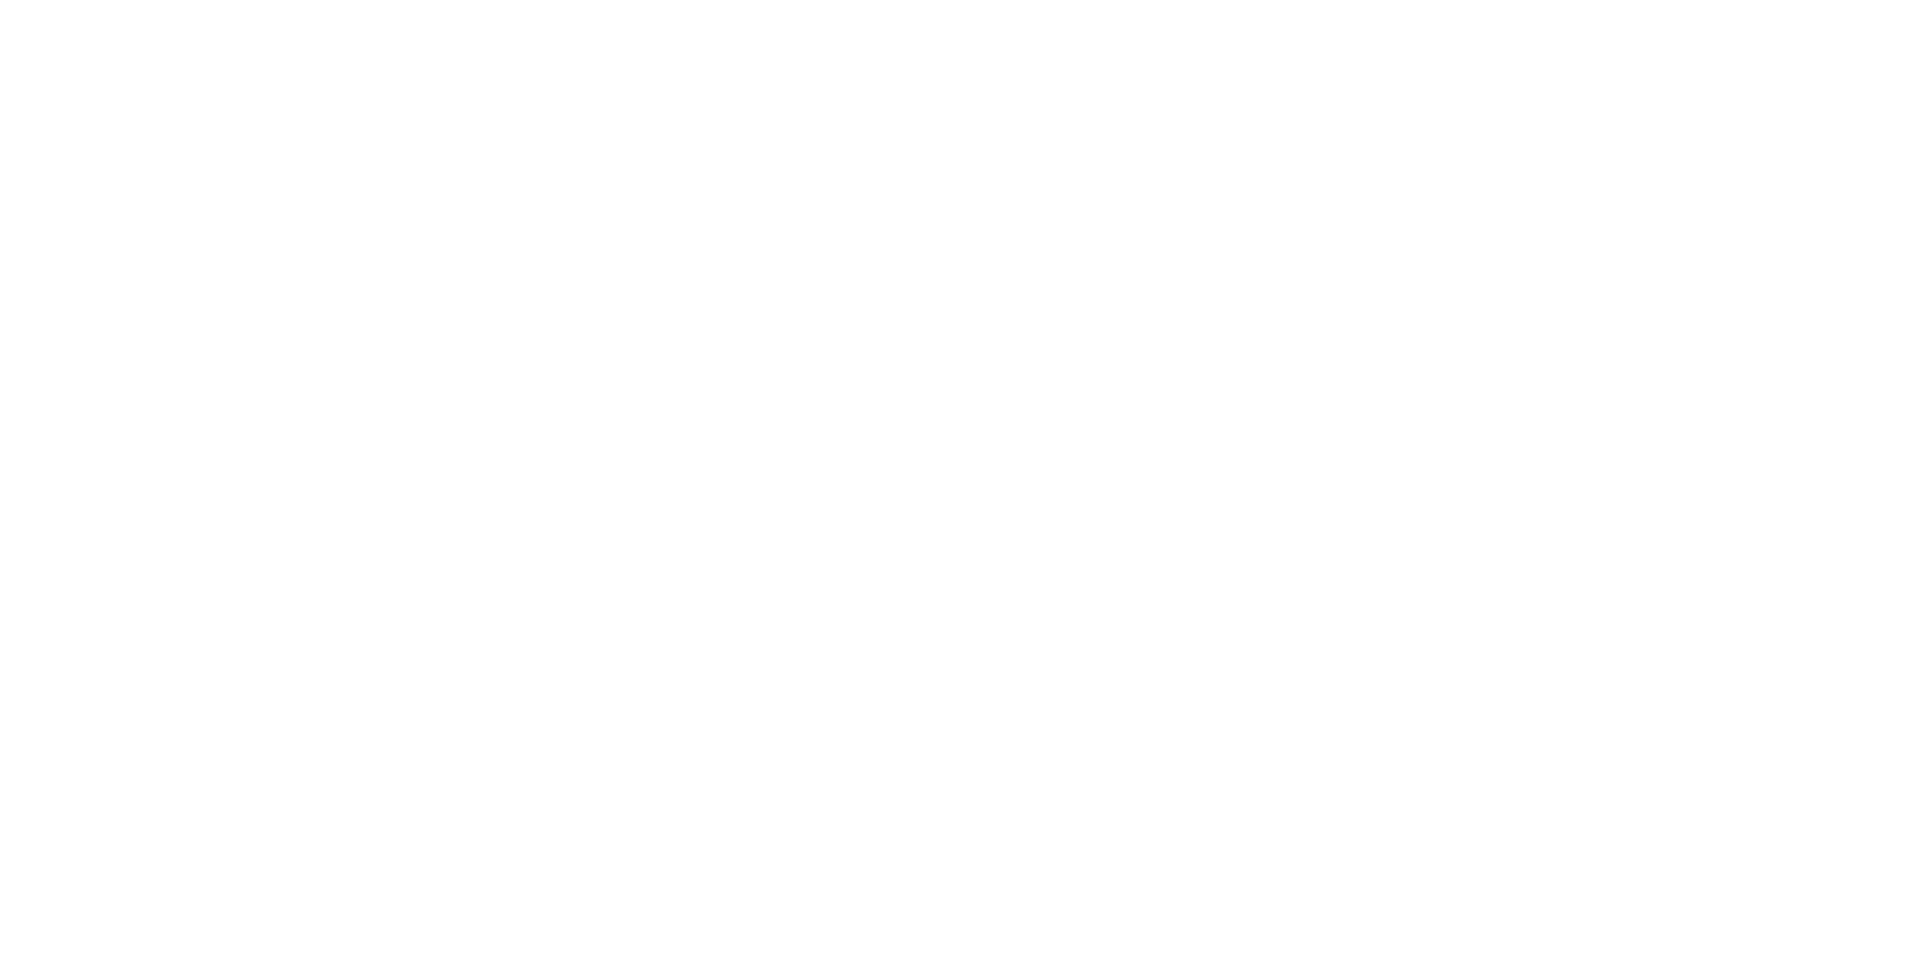 Work At Home & Digital Marketing For Seniors